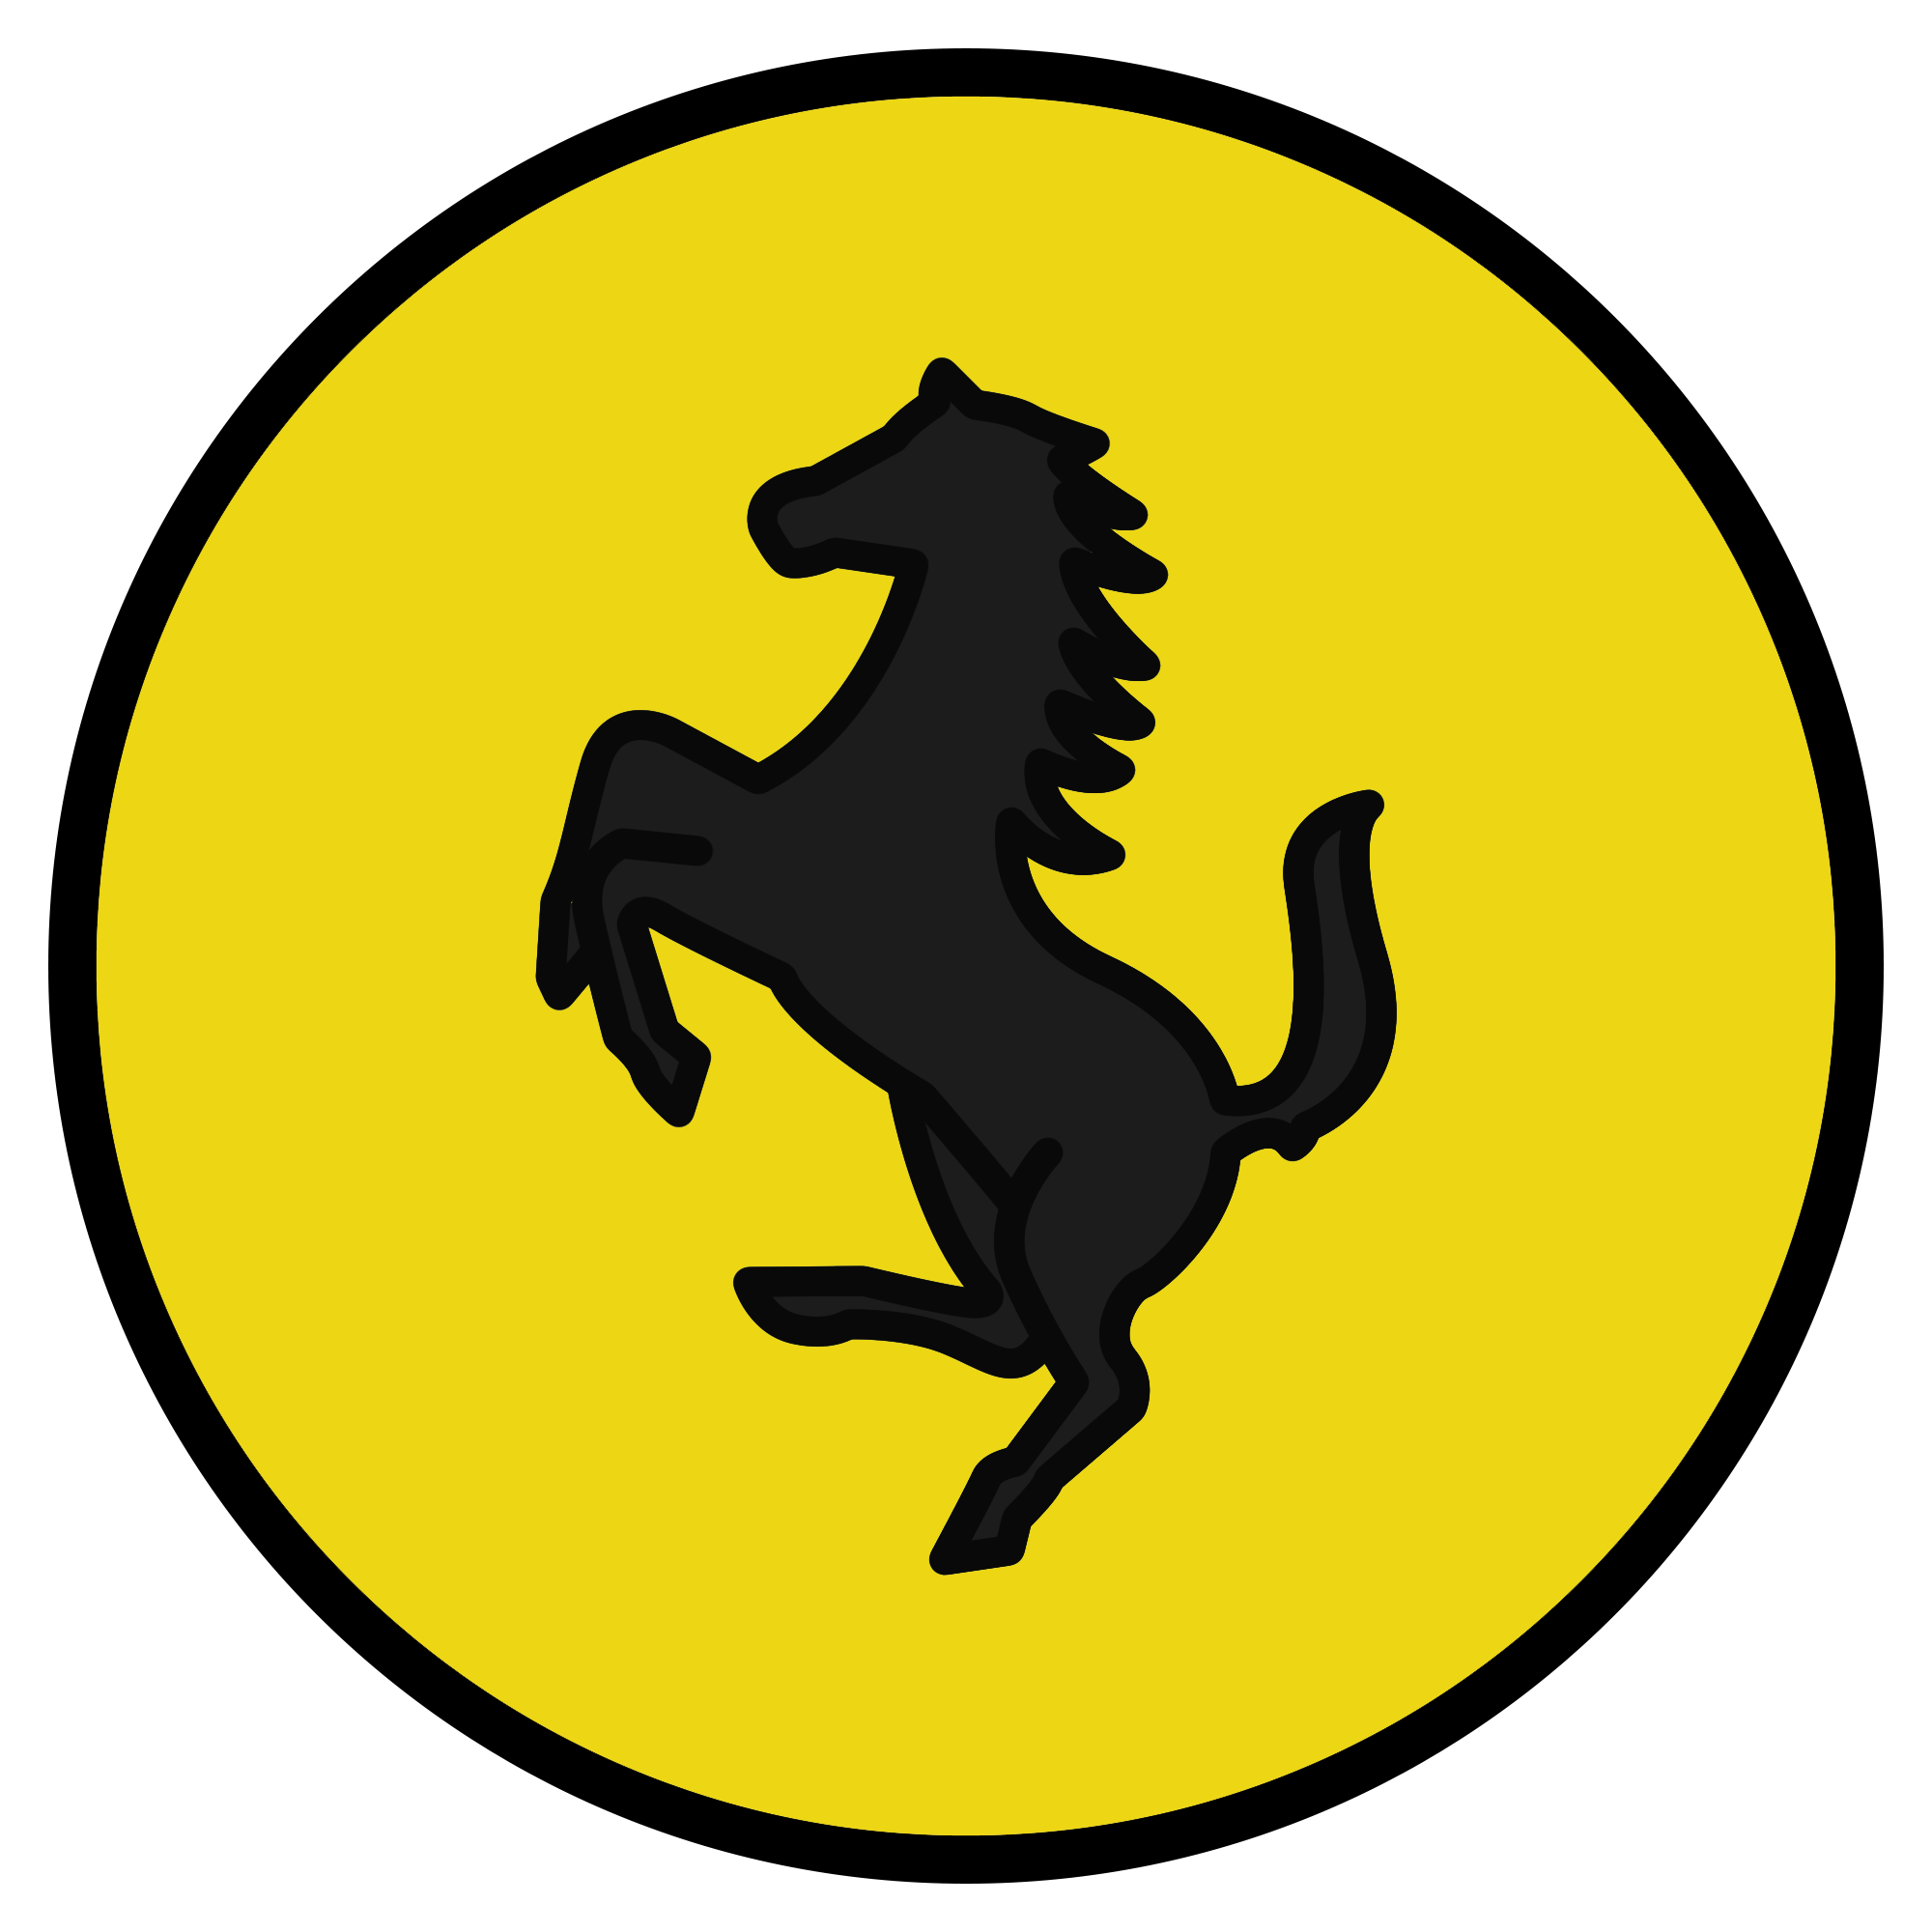 Ferrari logo PNG image